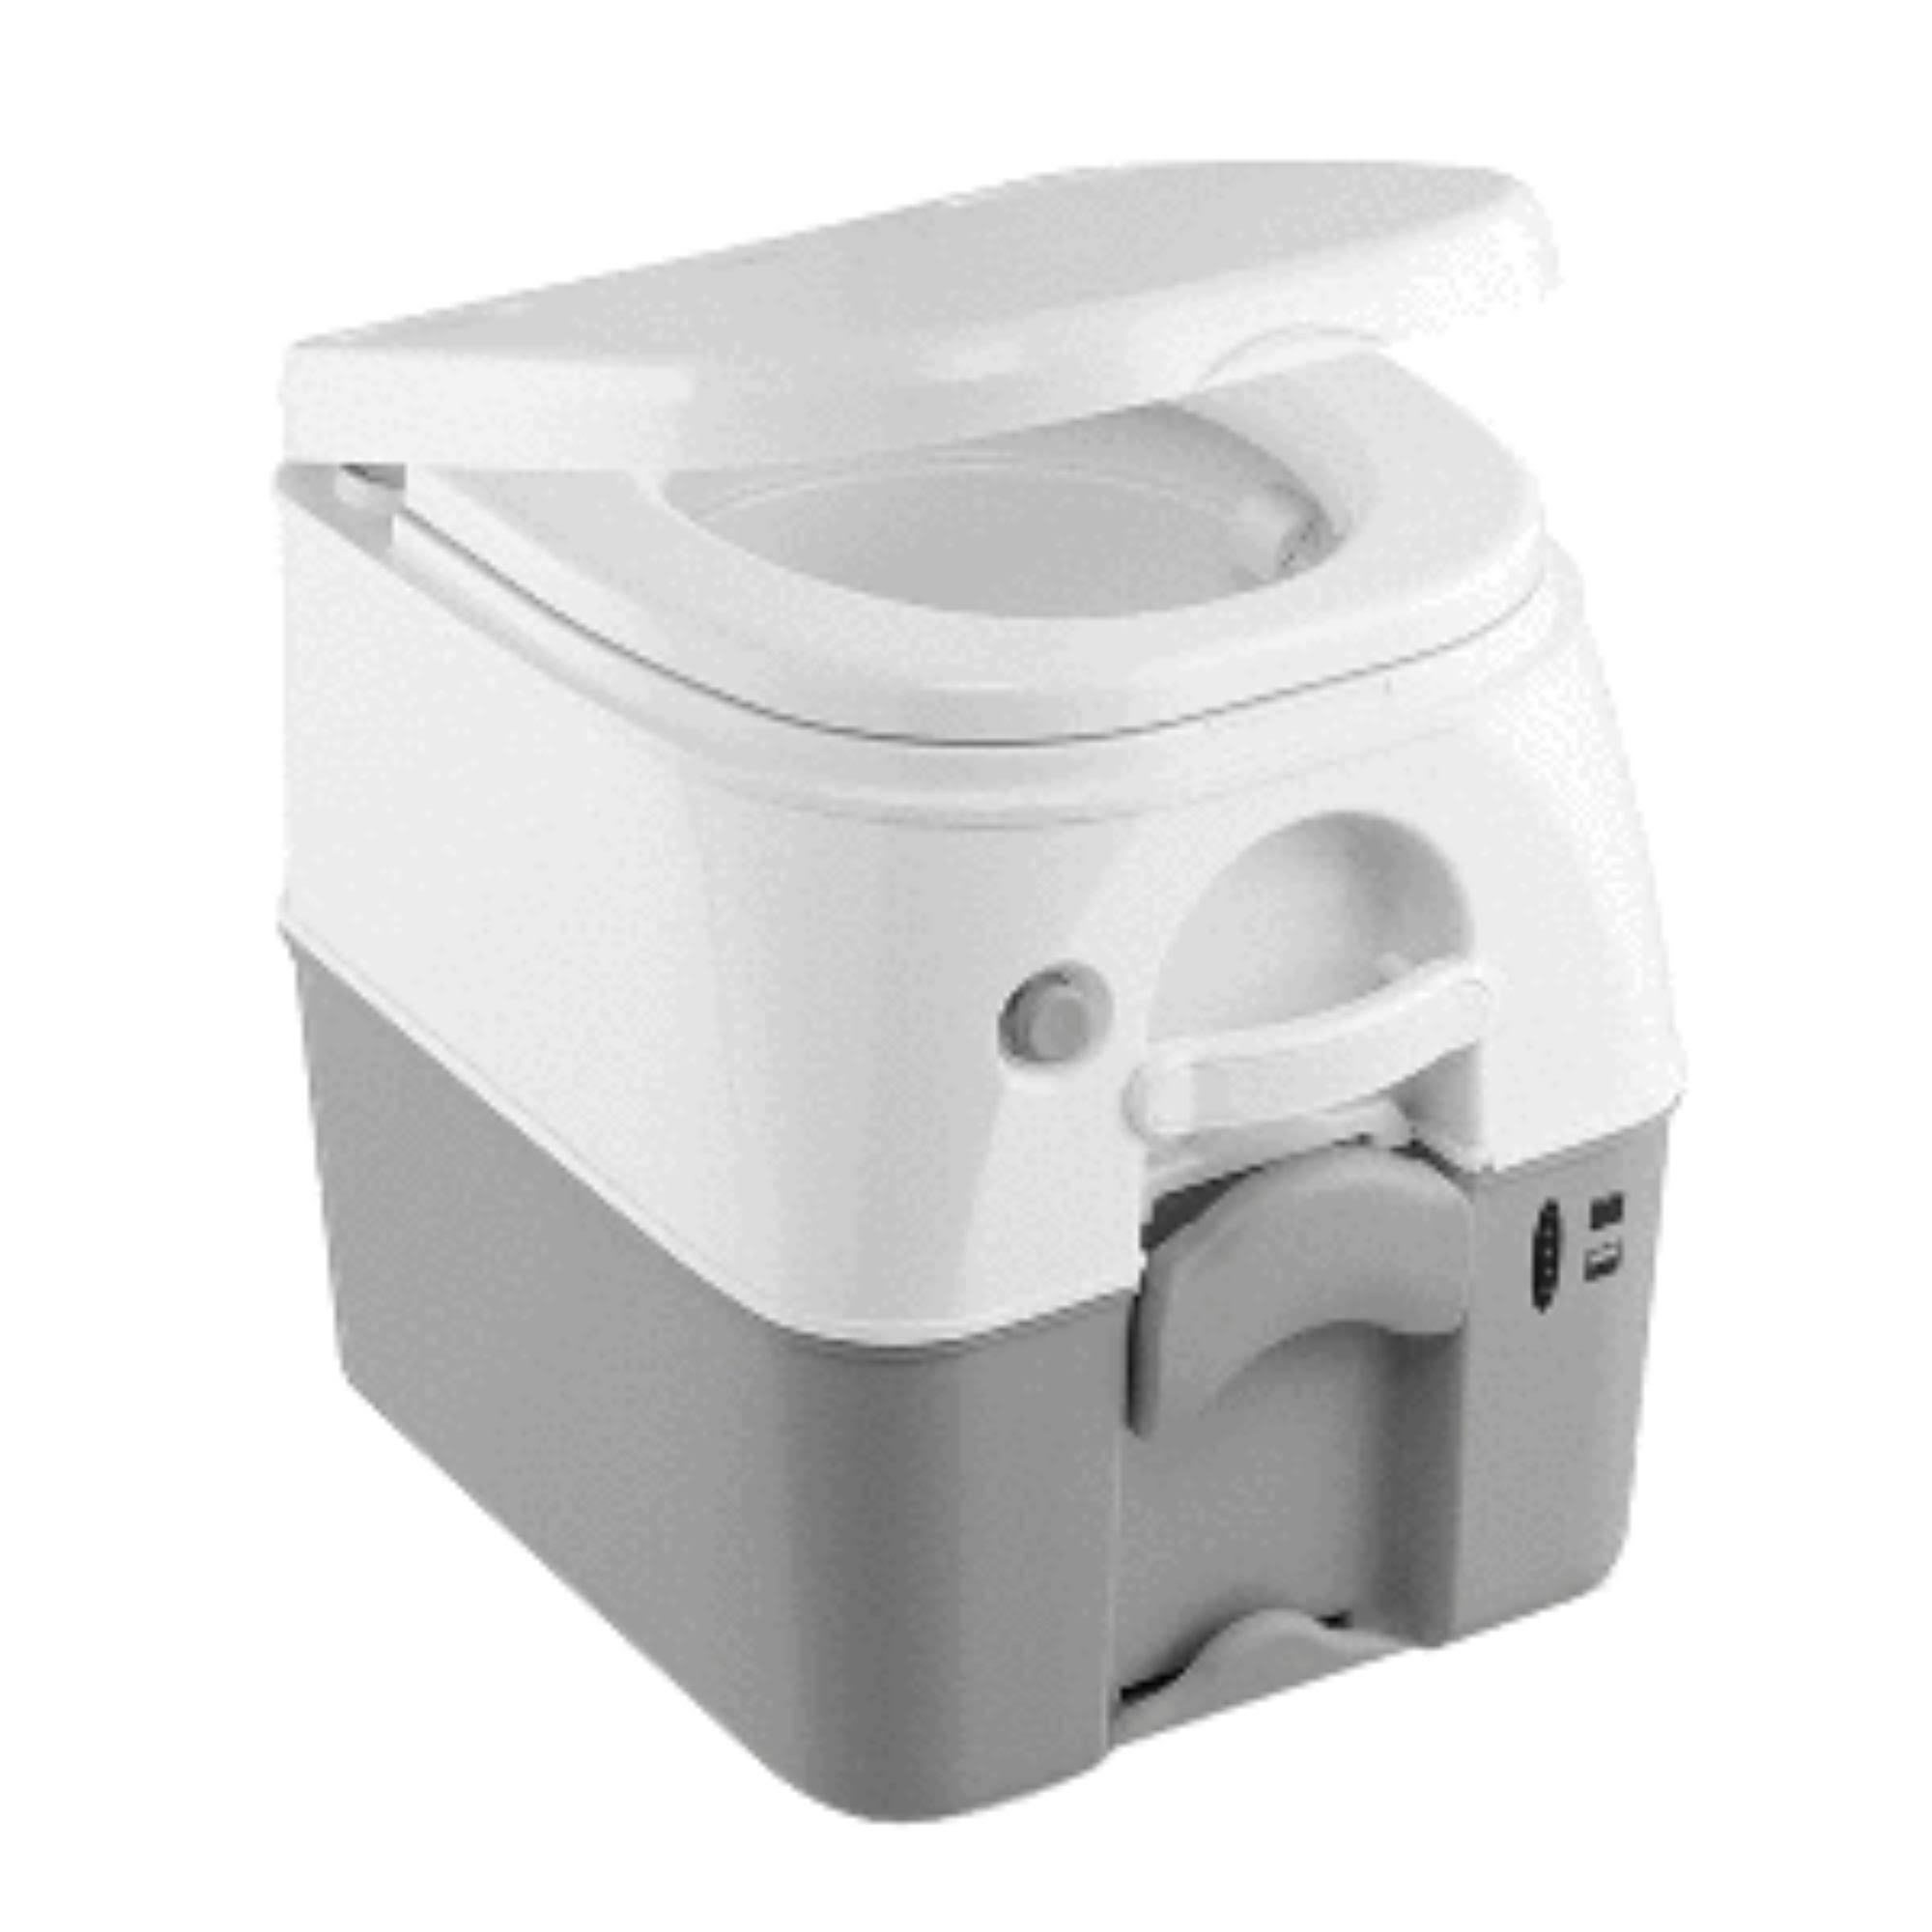 Dometic - Sealand 975msd Portable Toilet 5.0 Gallon - Grey W Brackets